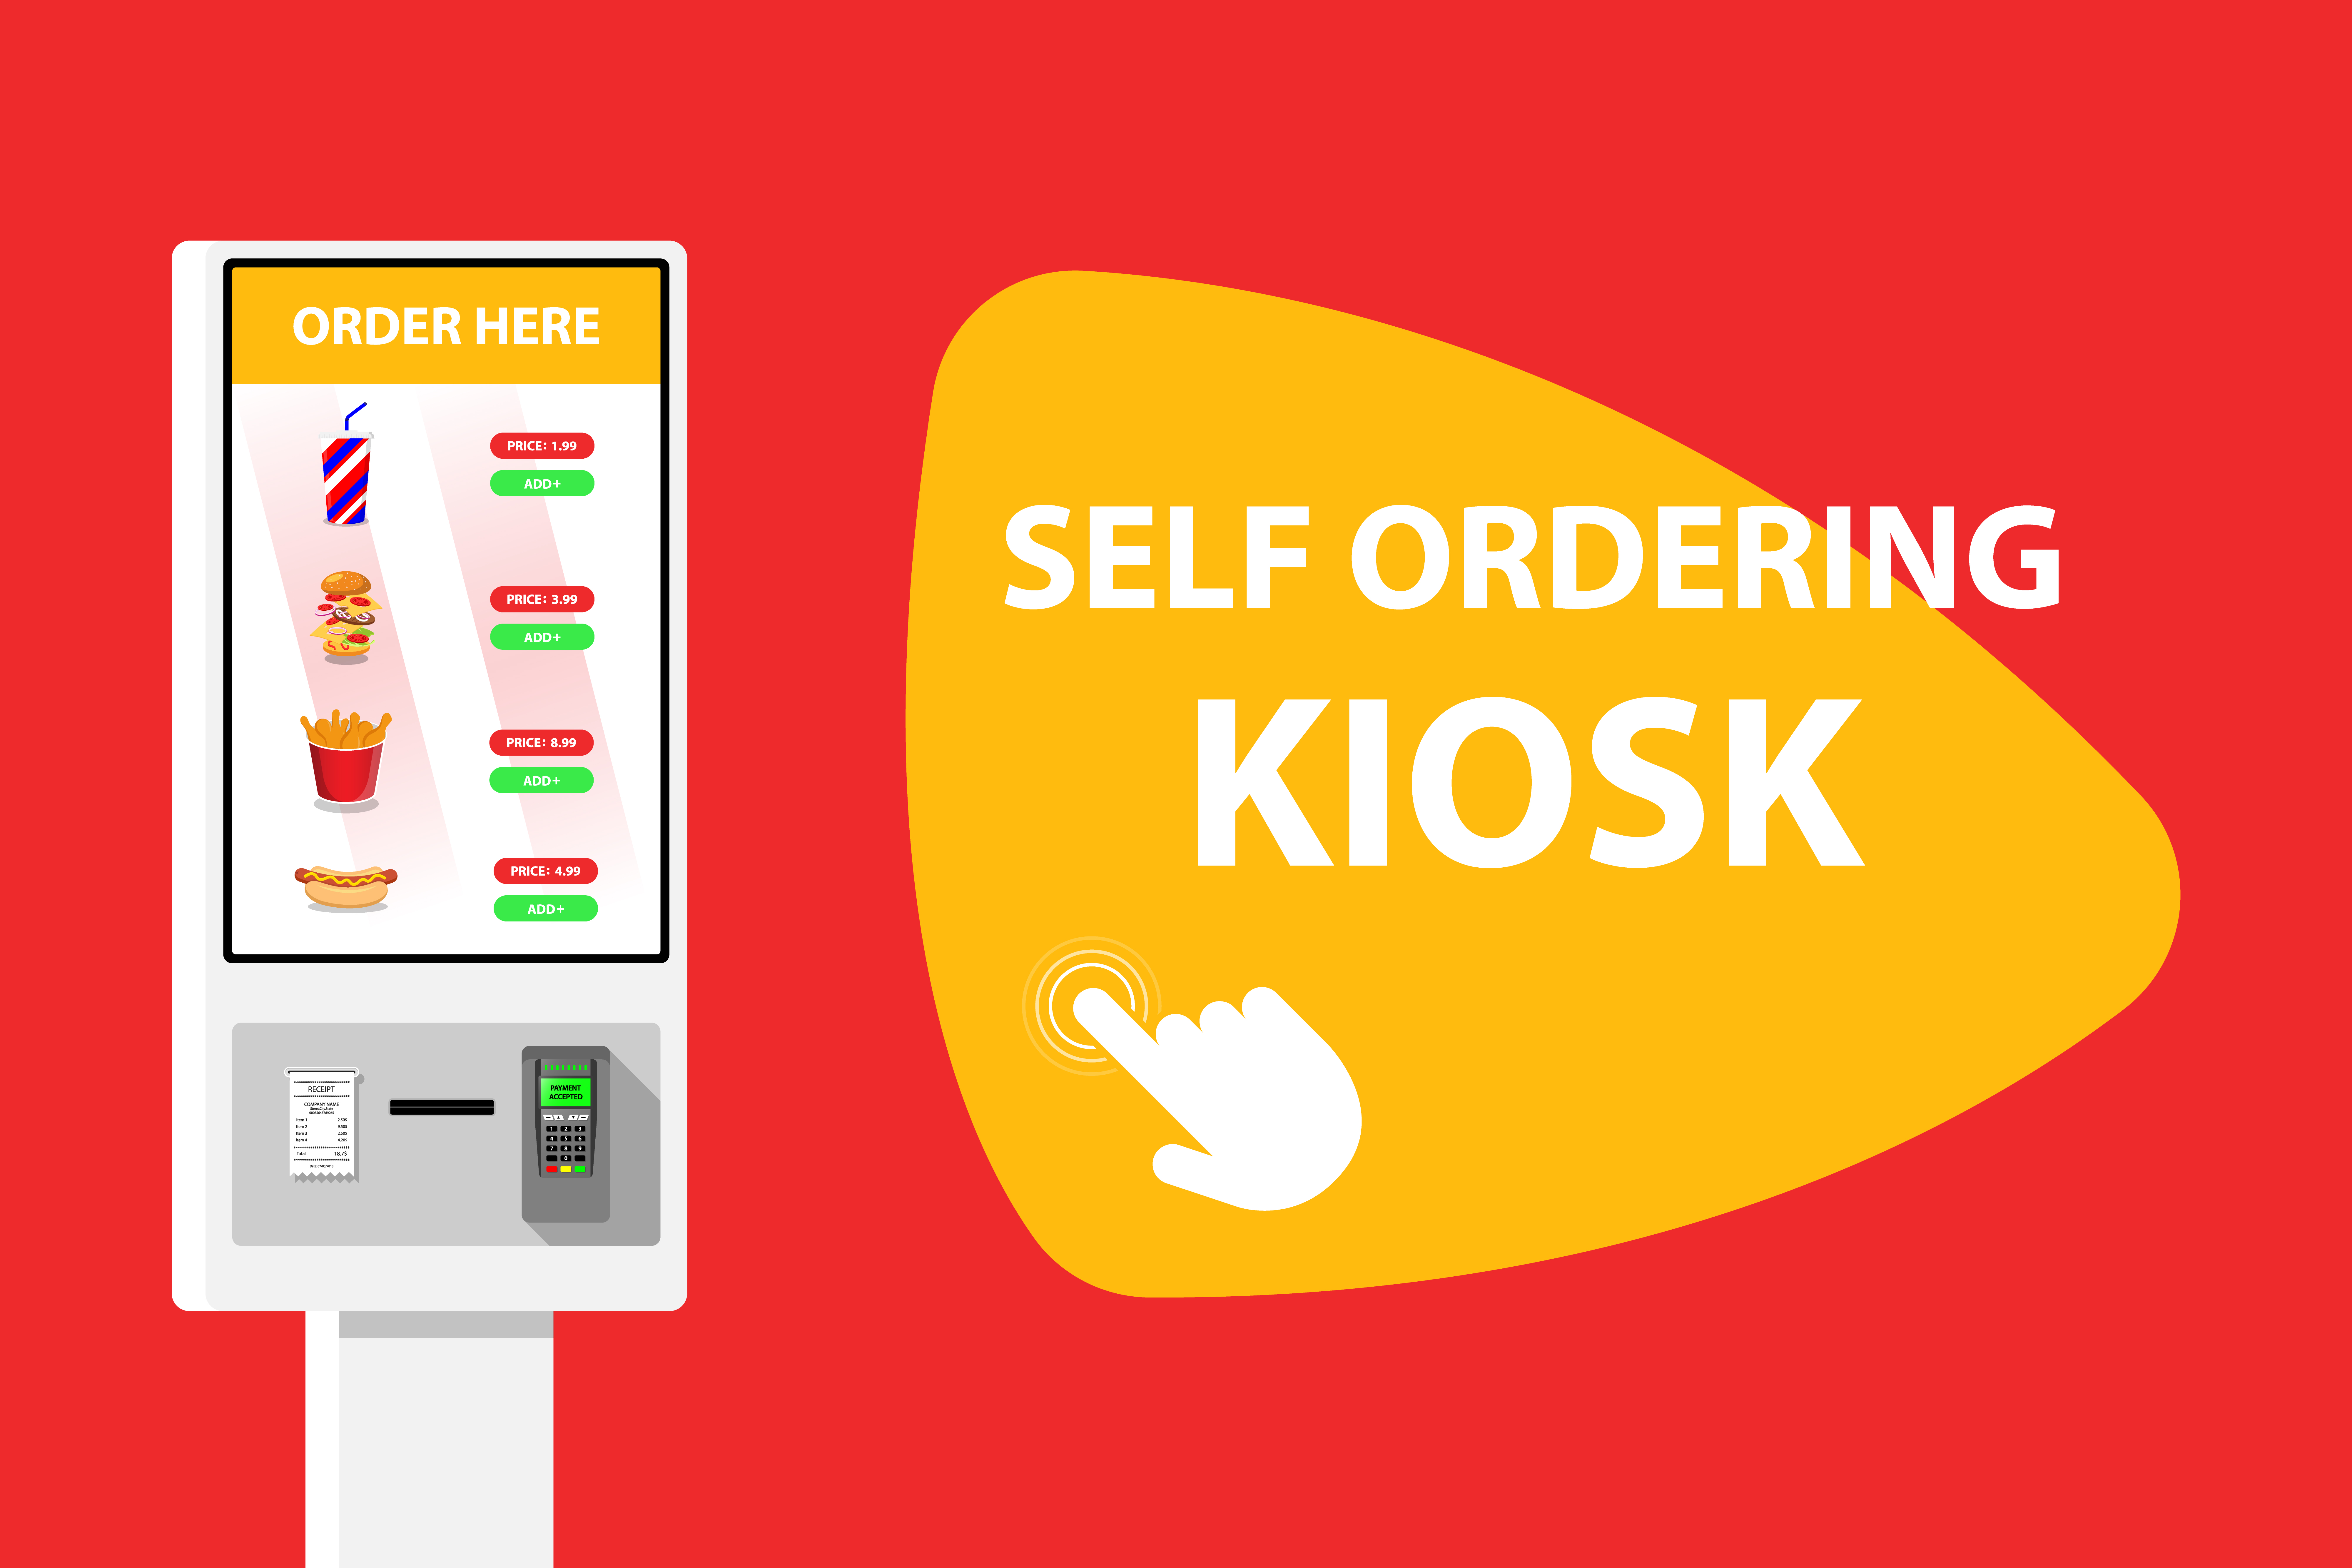 Self order kiosk image